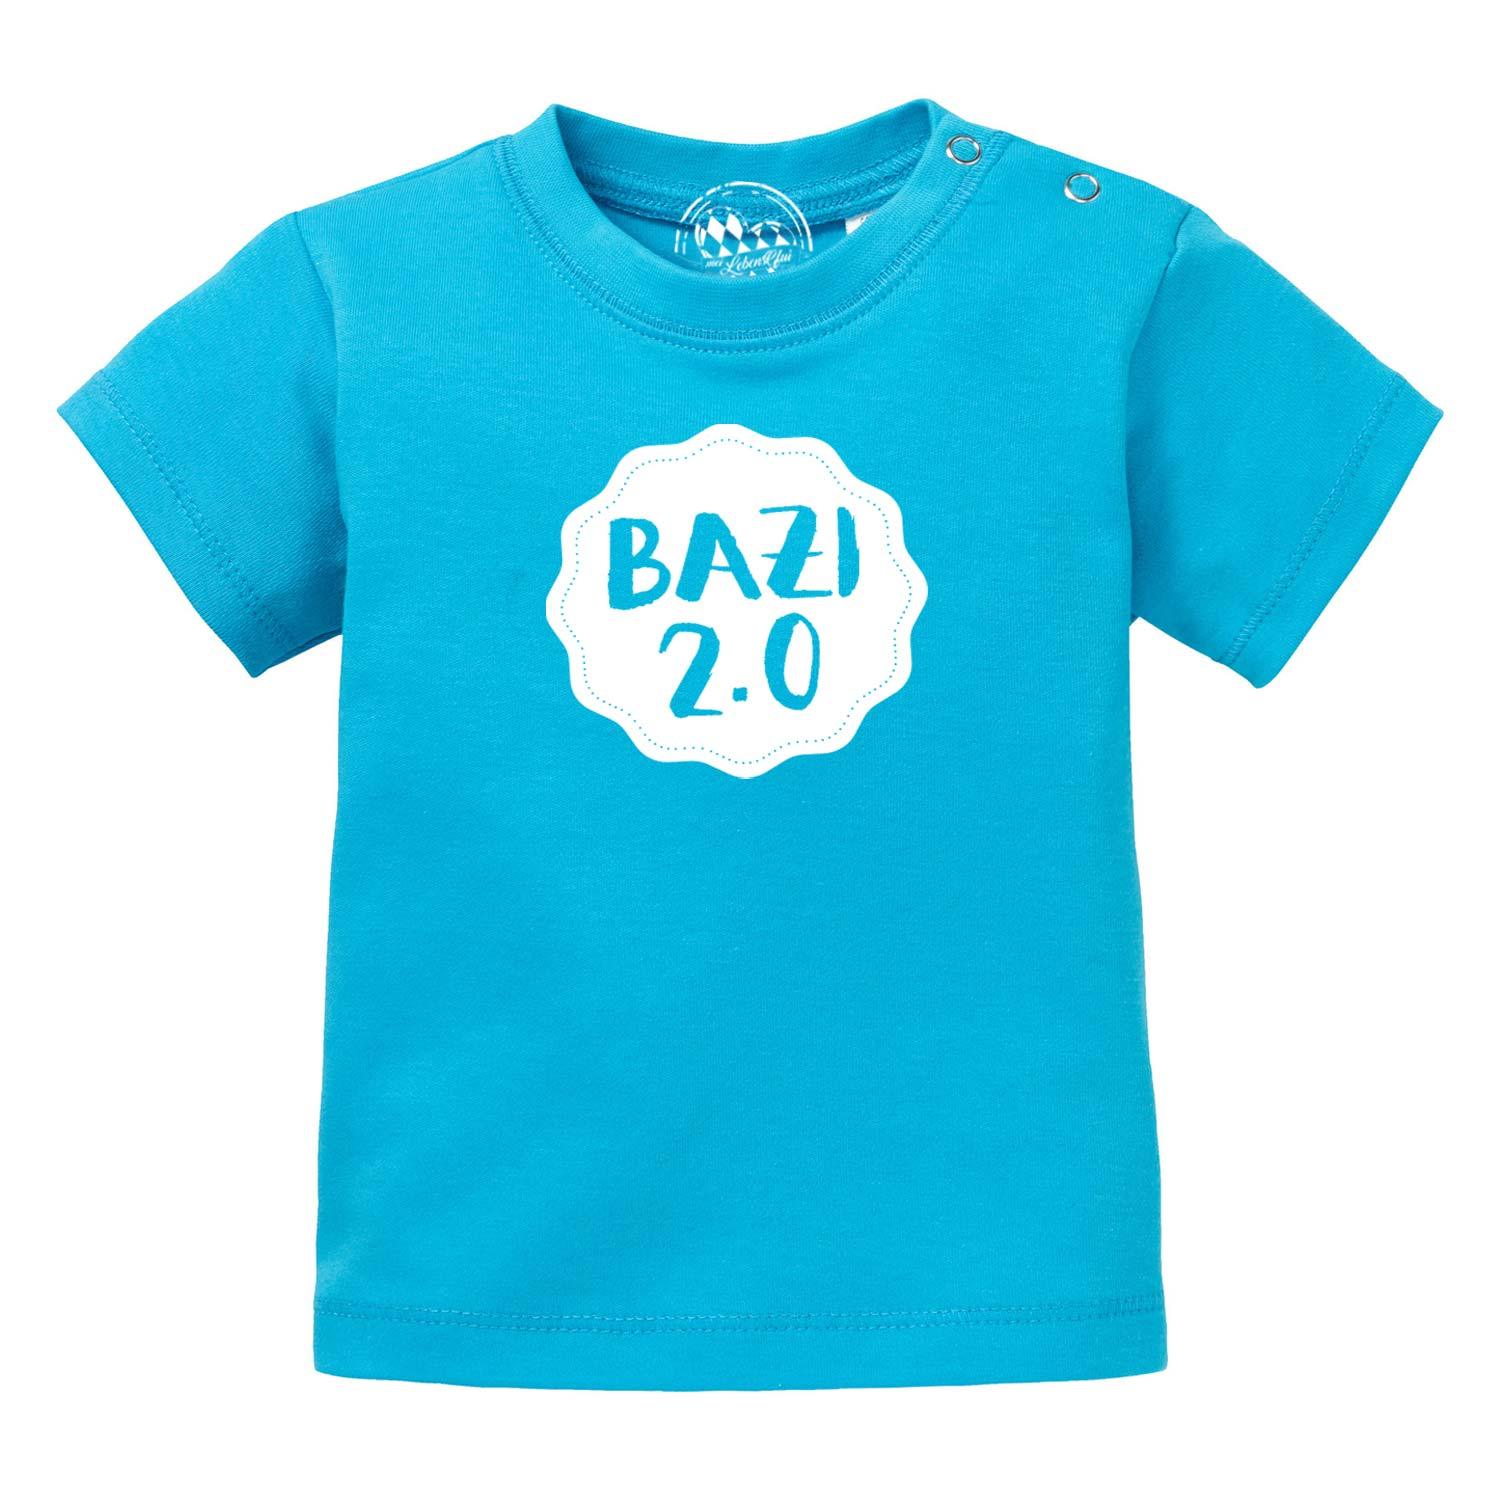 Baby T-Shirt "Bazi 2.0" - bavariashop - mei LebensGfui